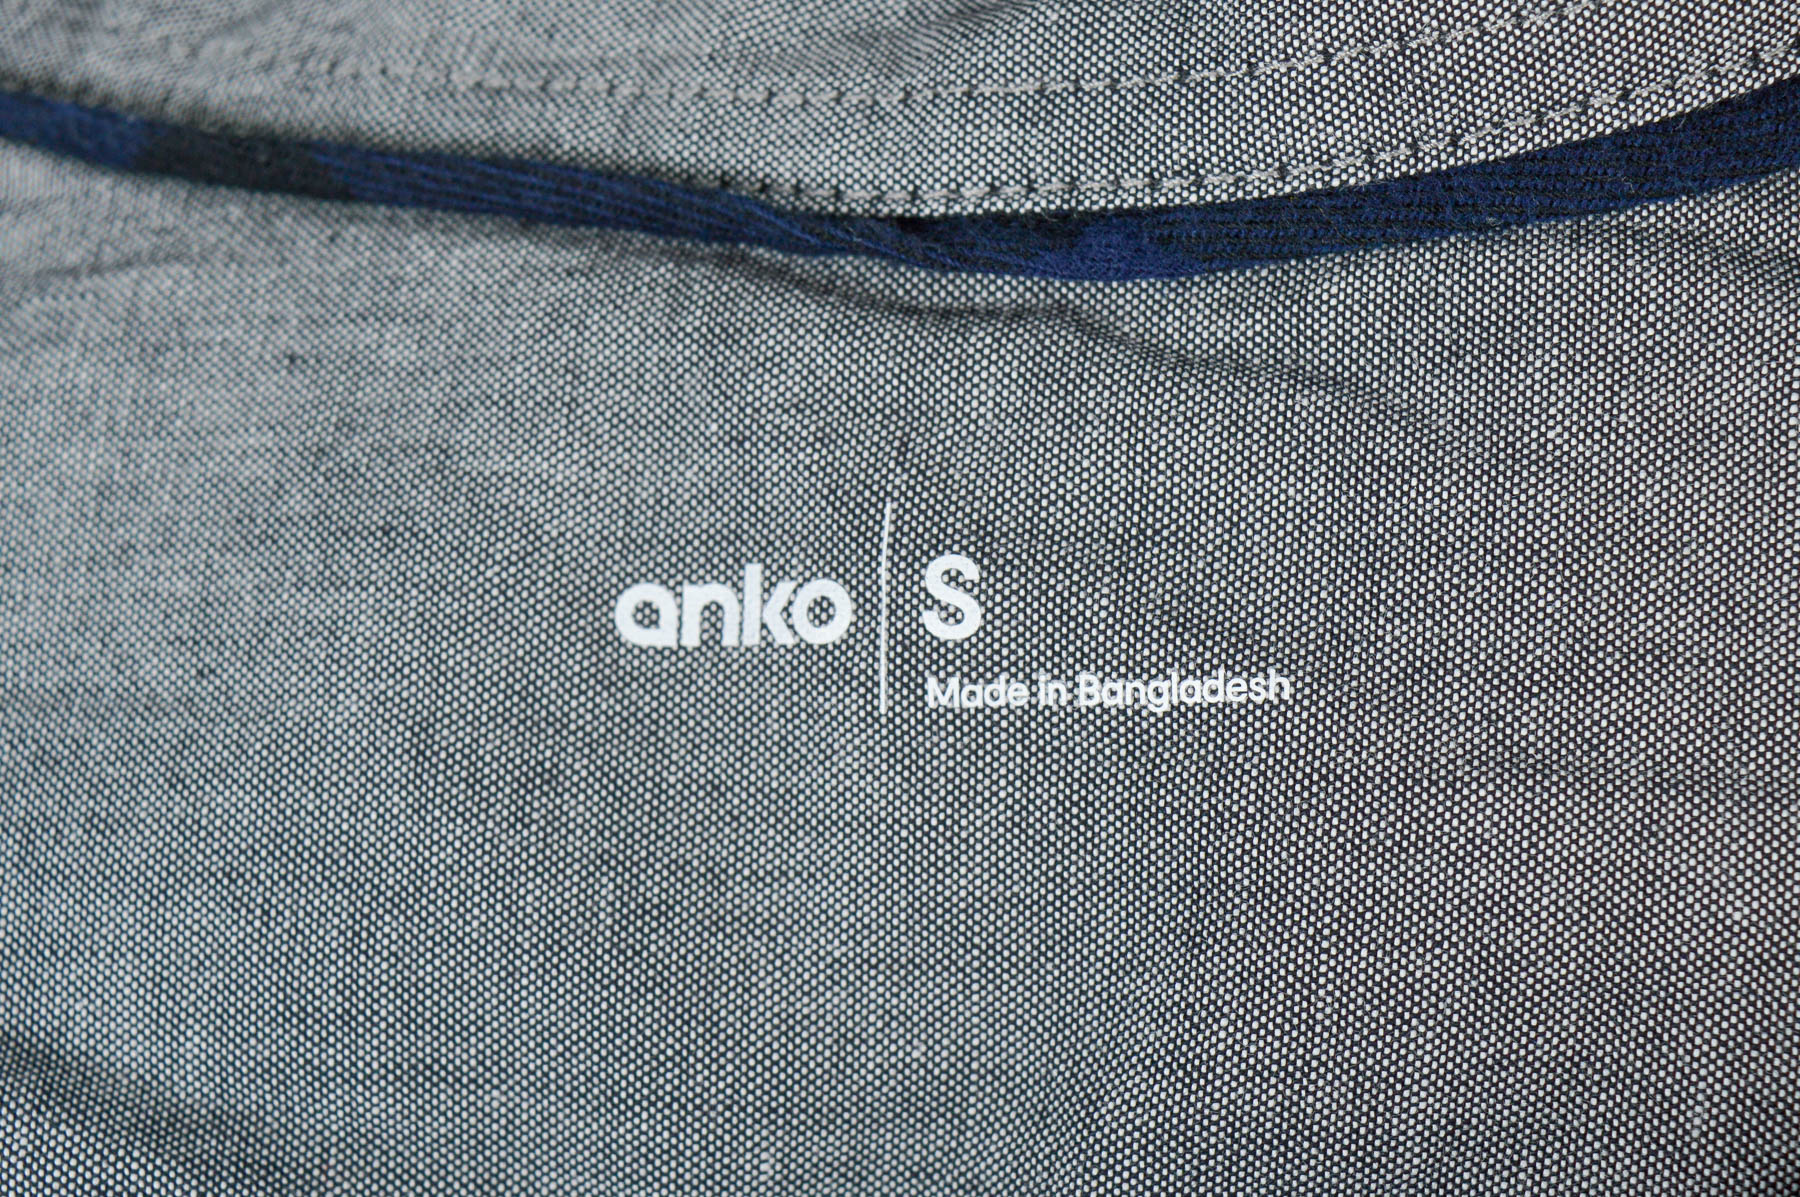 Men's shirt - anko - 2